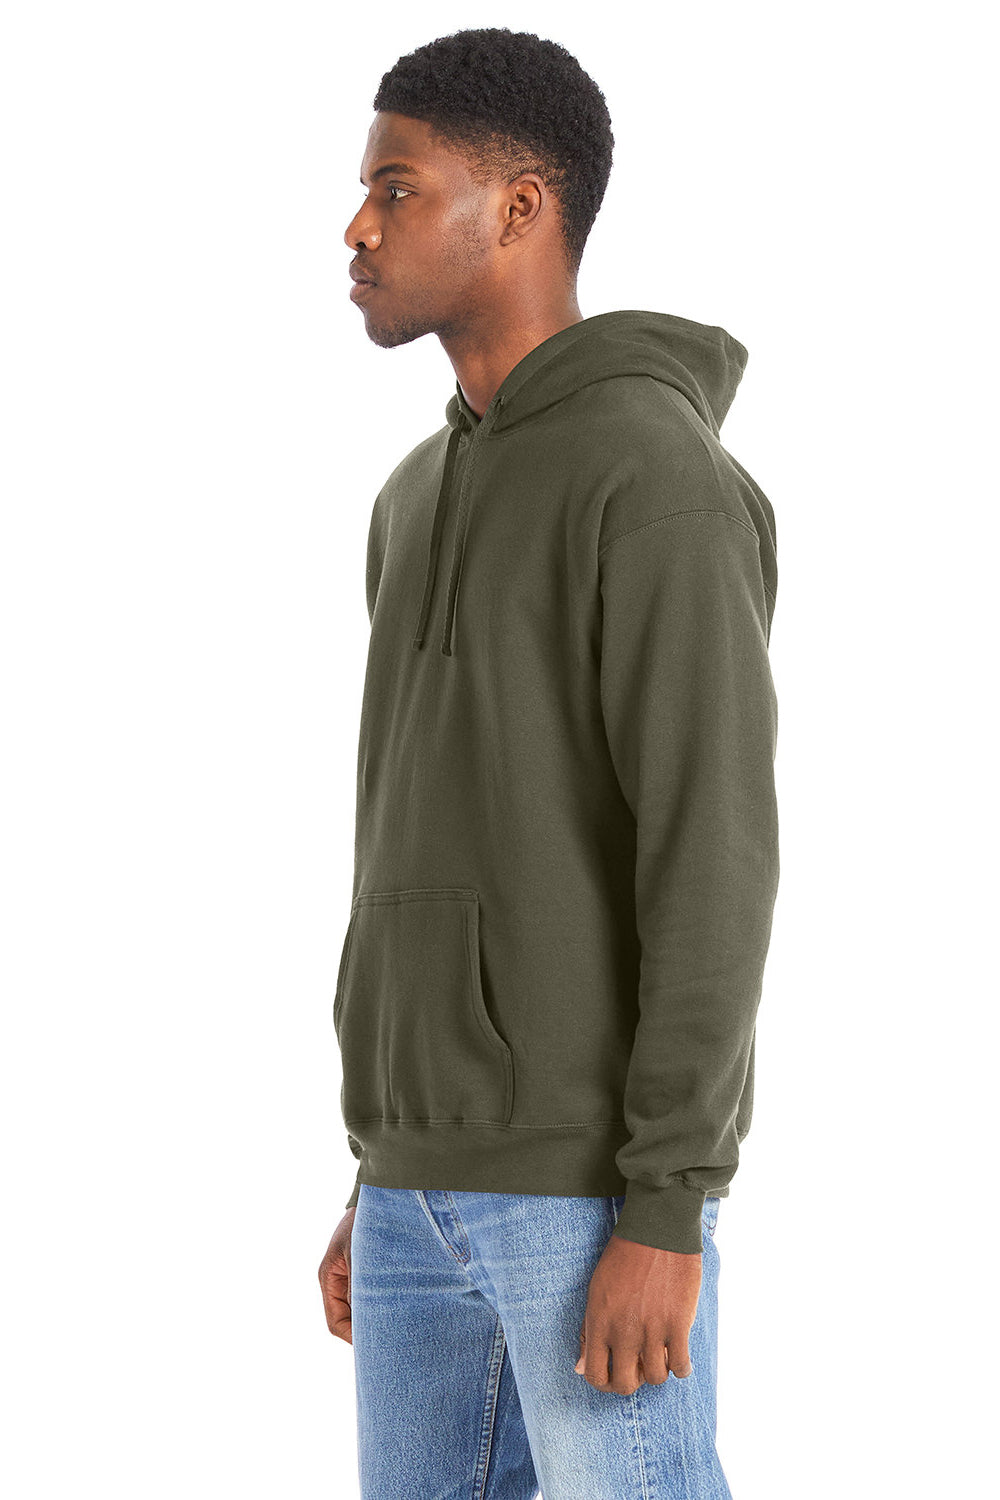 Hanes RS170 Mens Perfect Sweats Hooded Sweatshirt Hoodie Fatigue Green 3Q